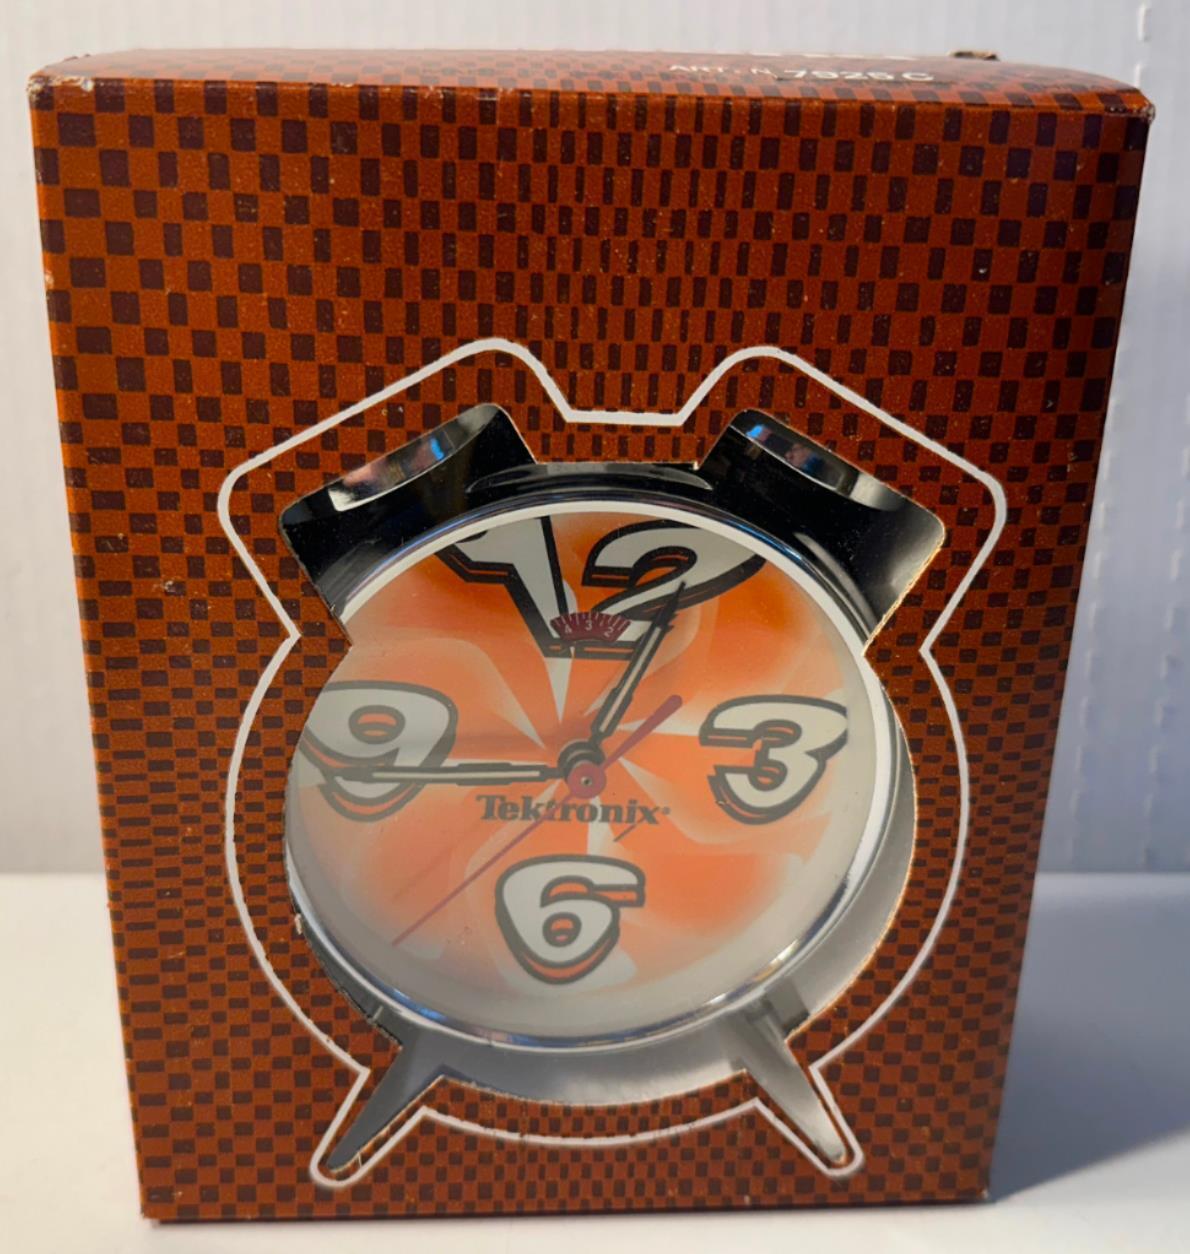 Vintage Diamond Alarm Clock Tektronix - New With Original Box